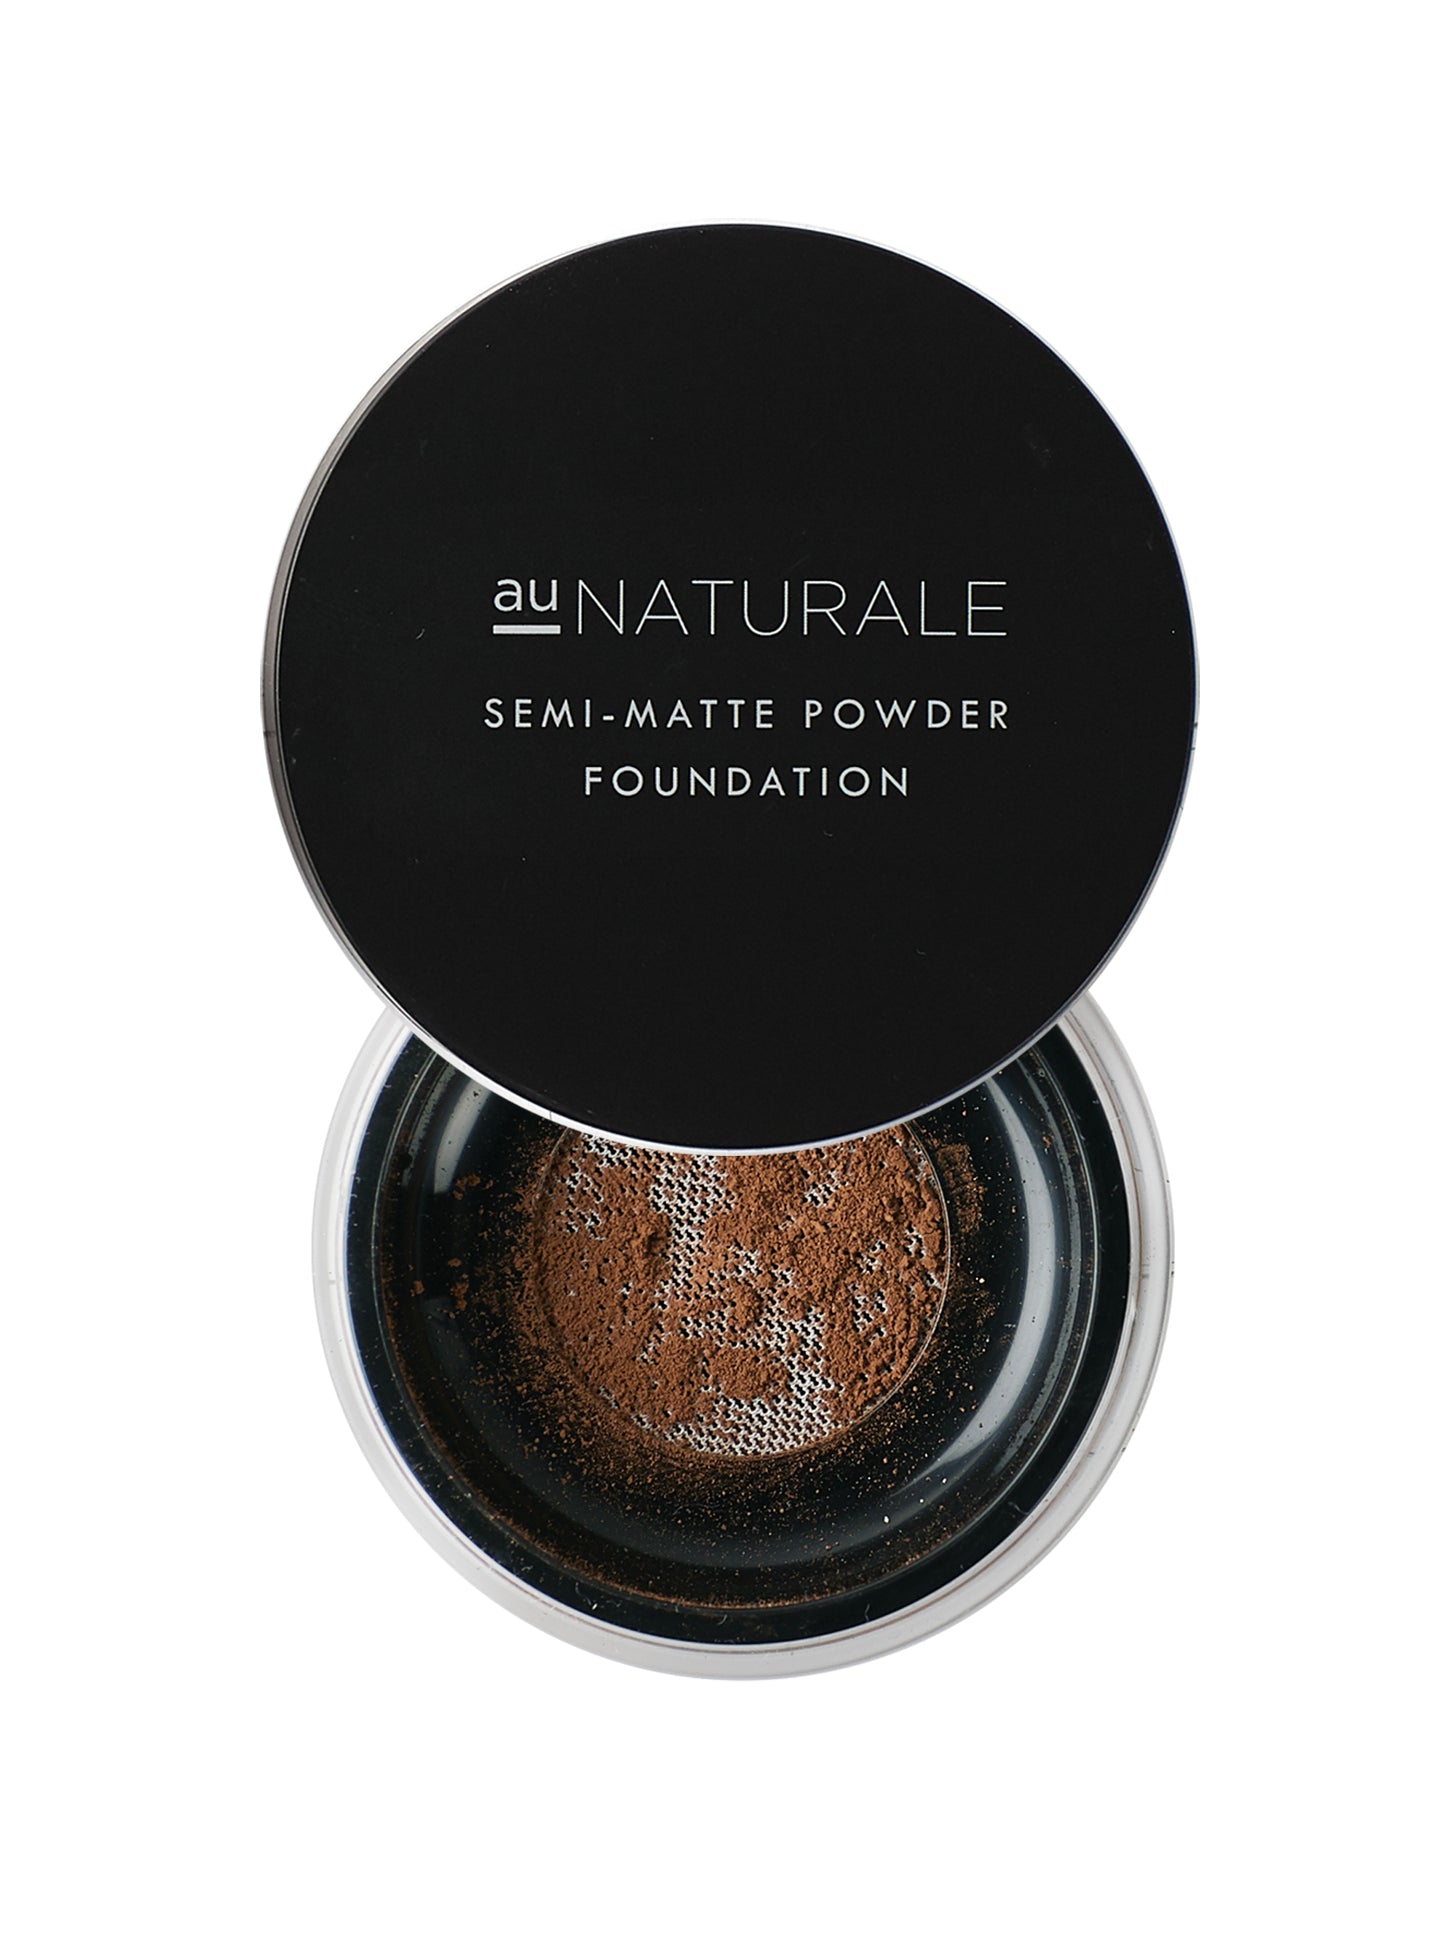 Shop Semi-Matte Powder Foundation, Clean Beauty